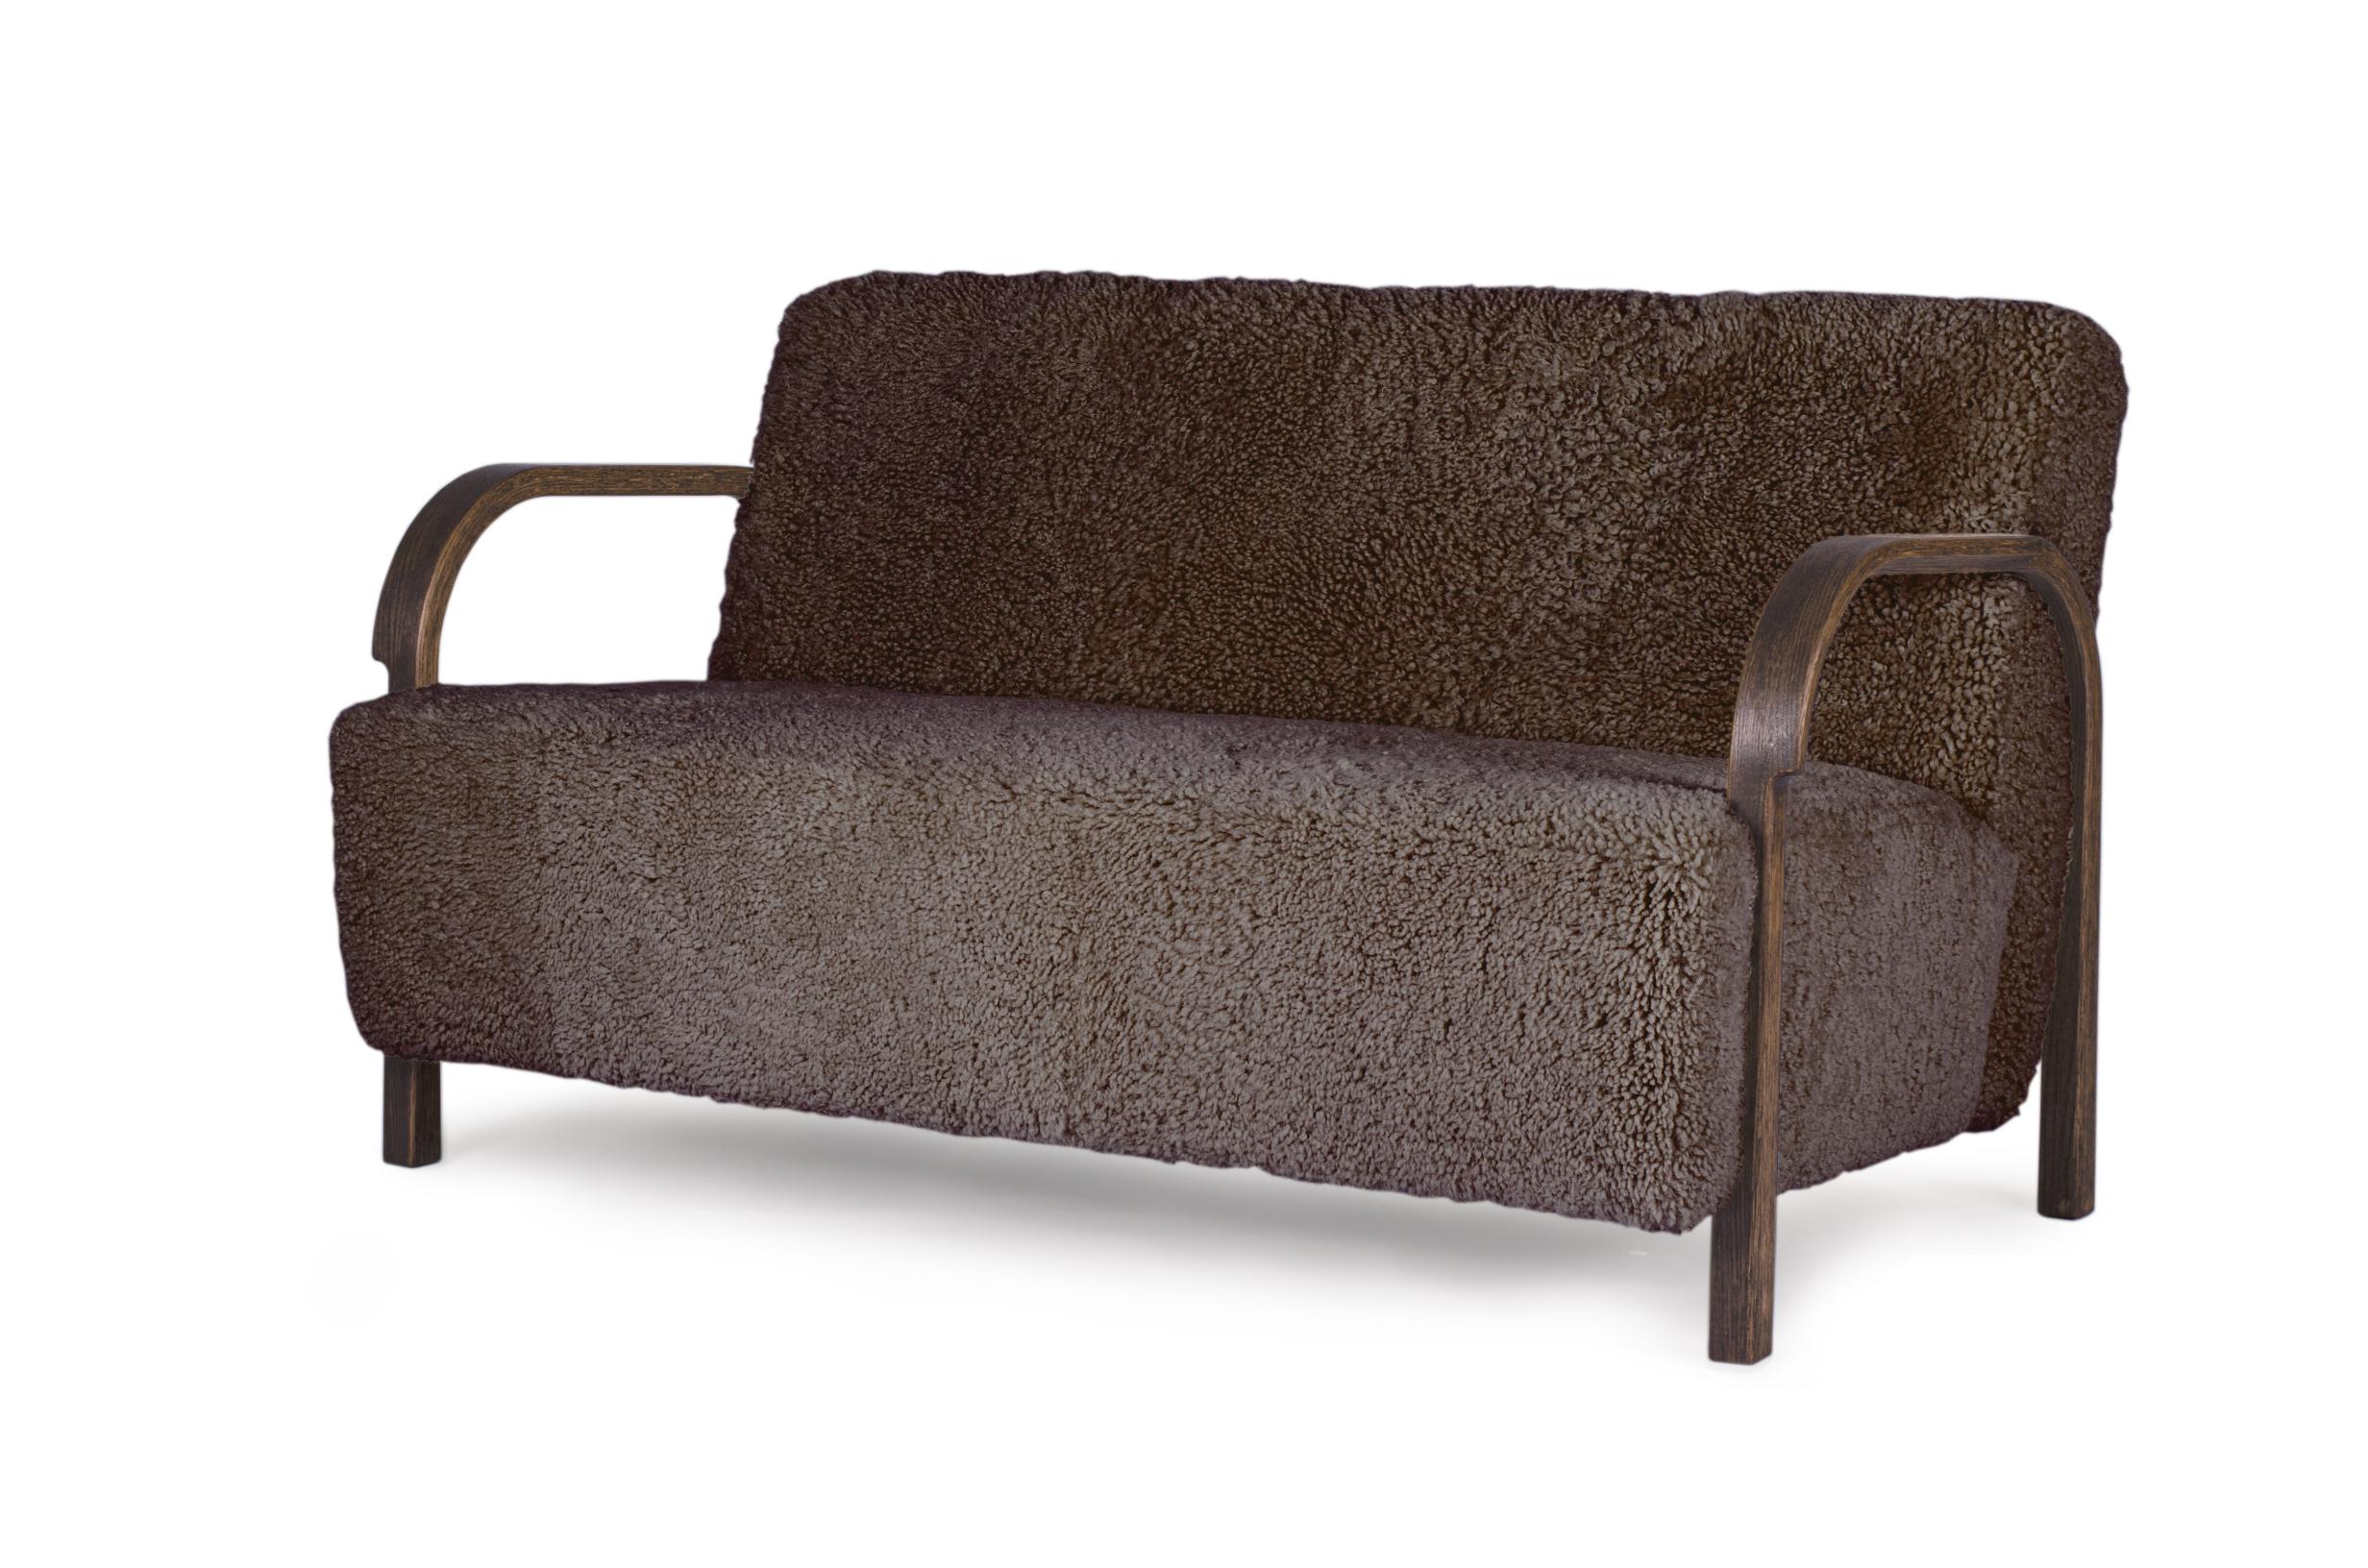 Sahara Sheepskin ARCH 2 seater sofa by Mazo Design
Dimensions: W 128 x D 79 x H 76 cm
Materials: Oak, Sheepskin
Also Available: 2 Seater Configuration, ROMO/Linara, DAW/Royal, KVADRAT/Remix, KVADRAT/Hallingdal & Fiord, BUTE/Storr, DEDAR/Linear,